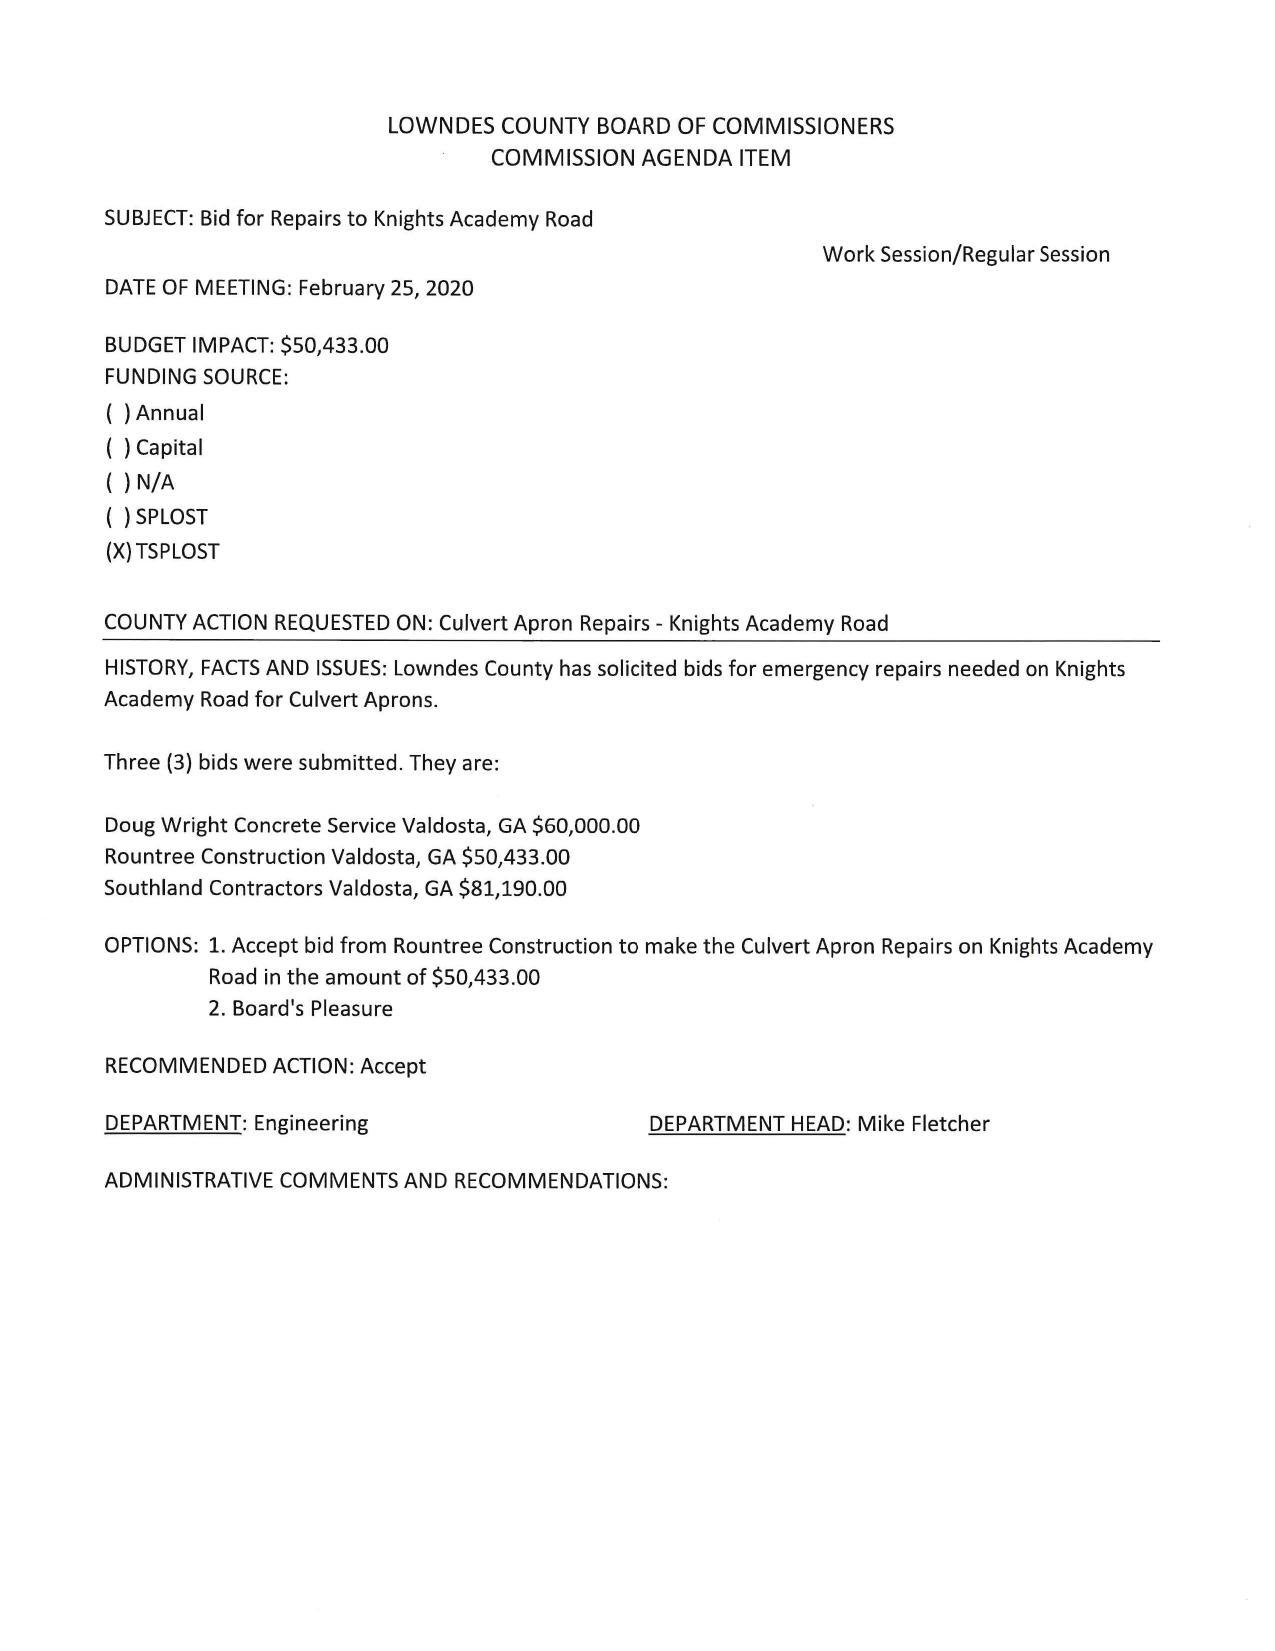 BUDGET IMPACT: $50,433.00 emergency repairs for Culvert Aprons